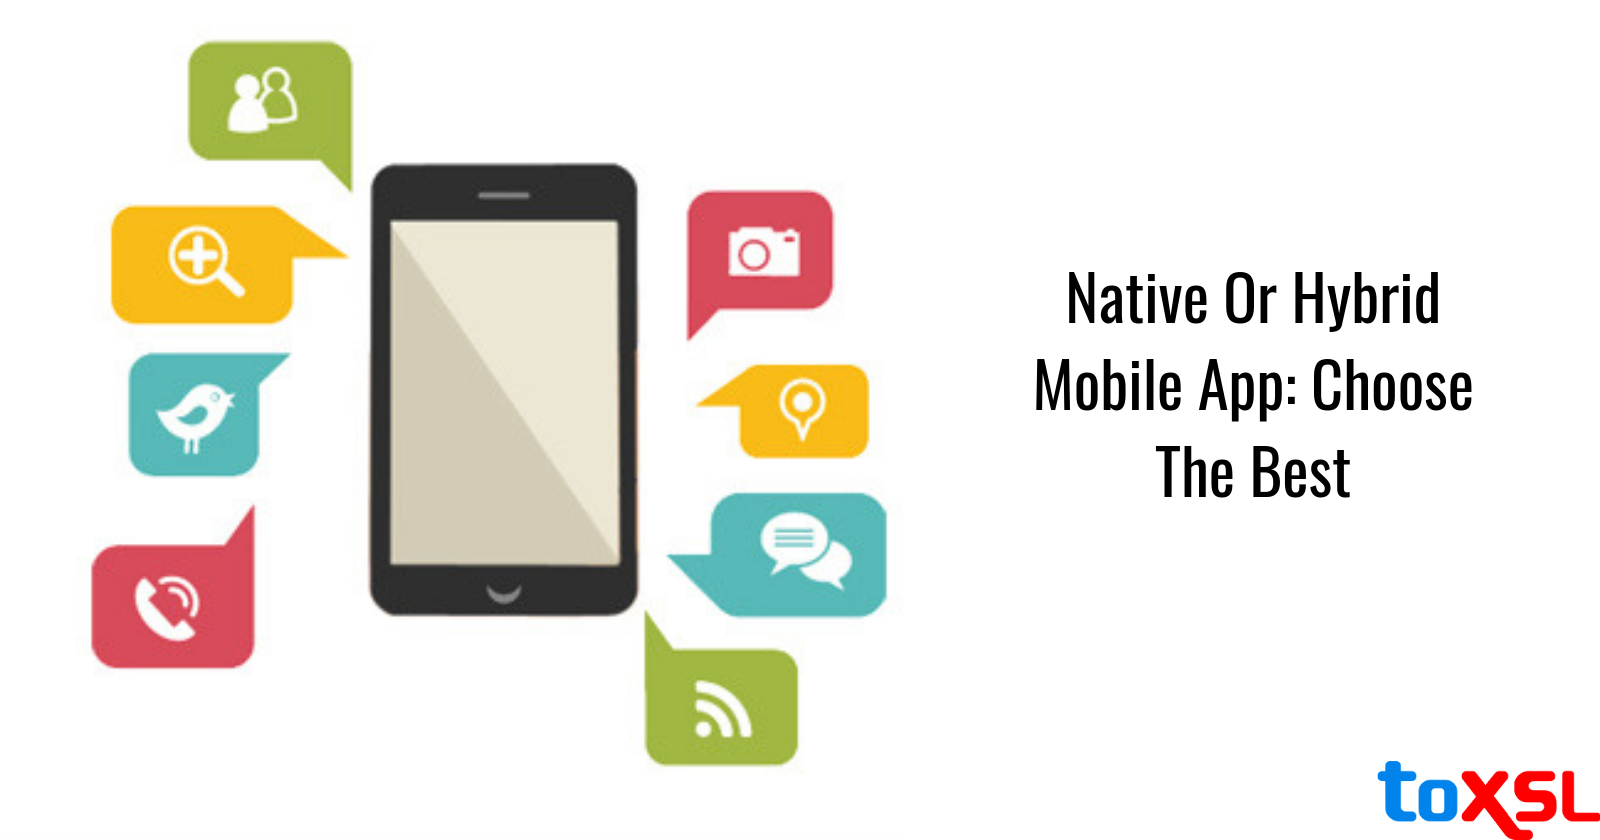 Native Or Hybrid Mobile App: Choose The Best